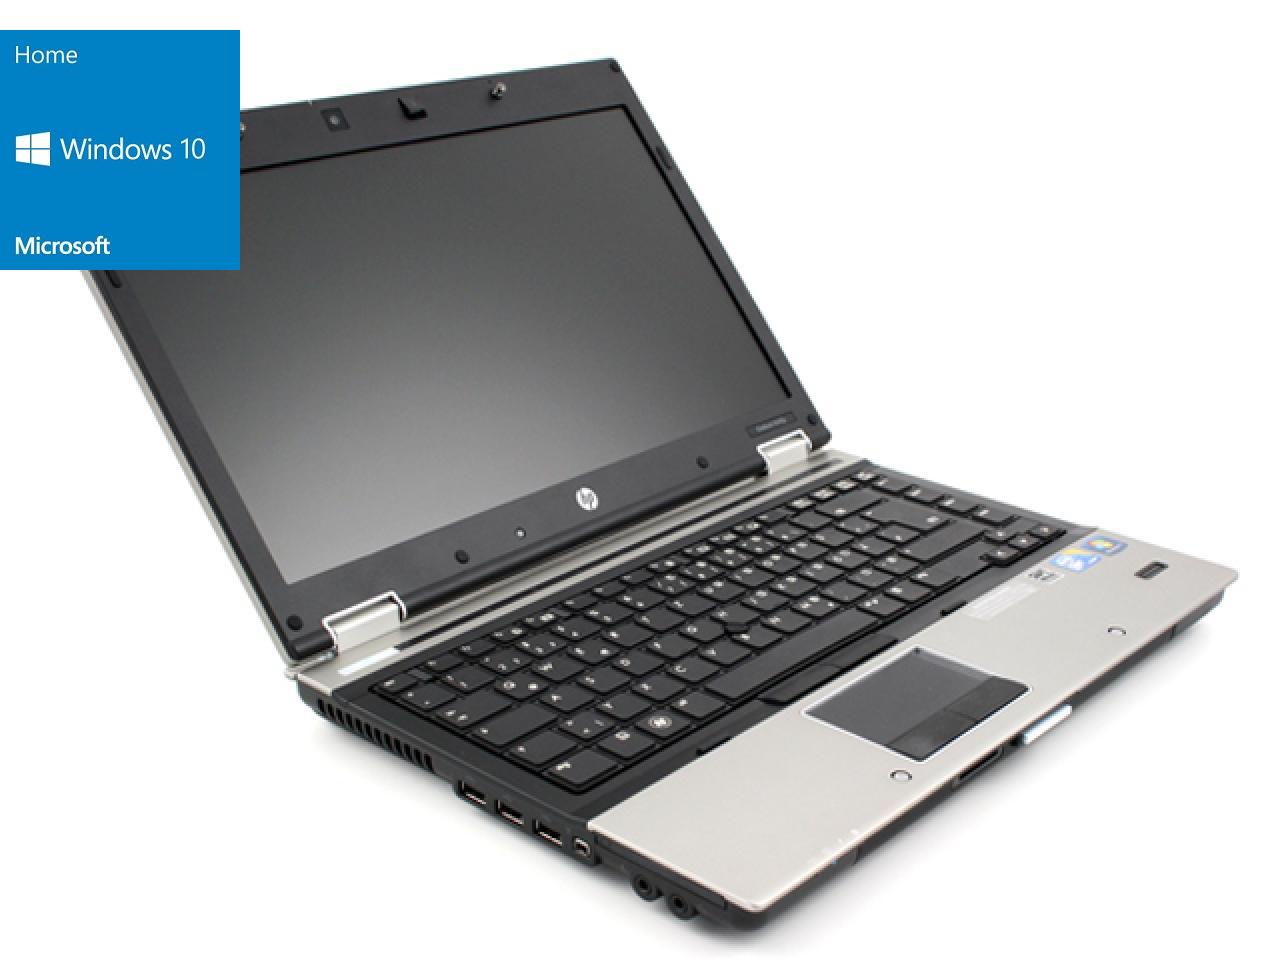 Hewlett Packard EliteBook 8440p